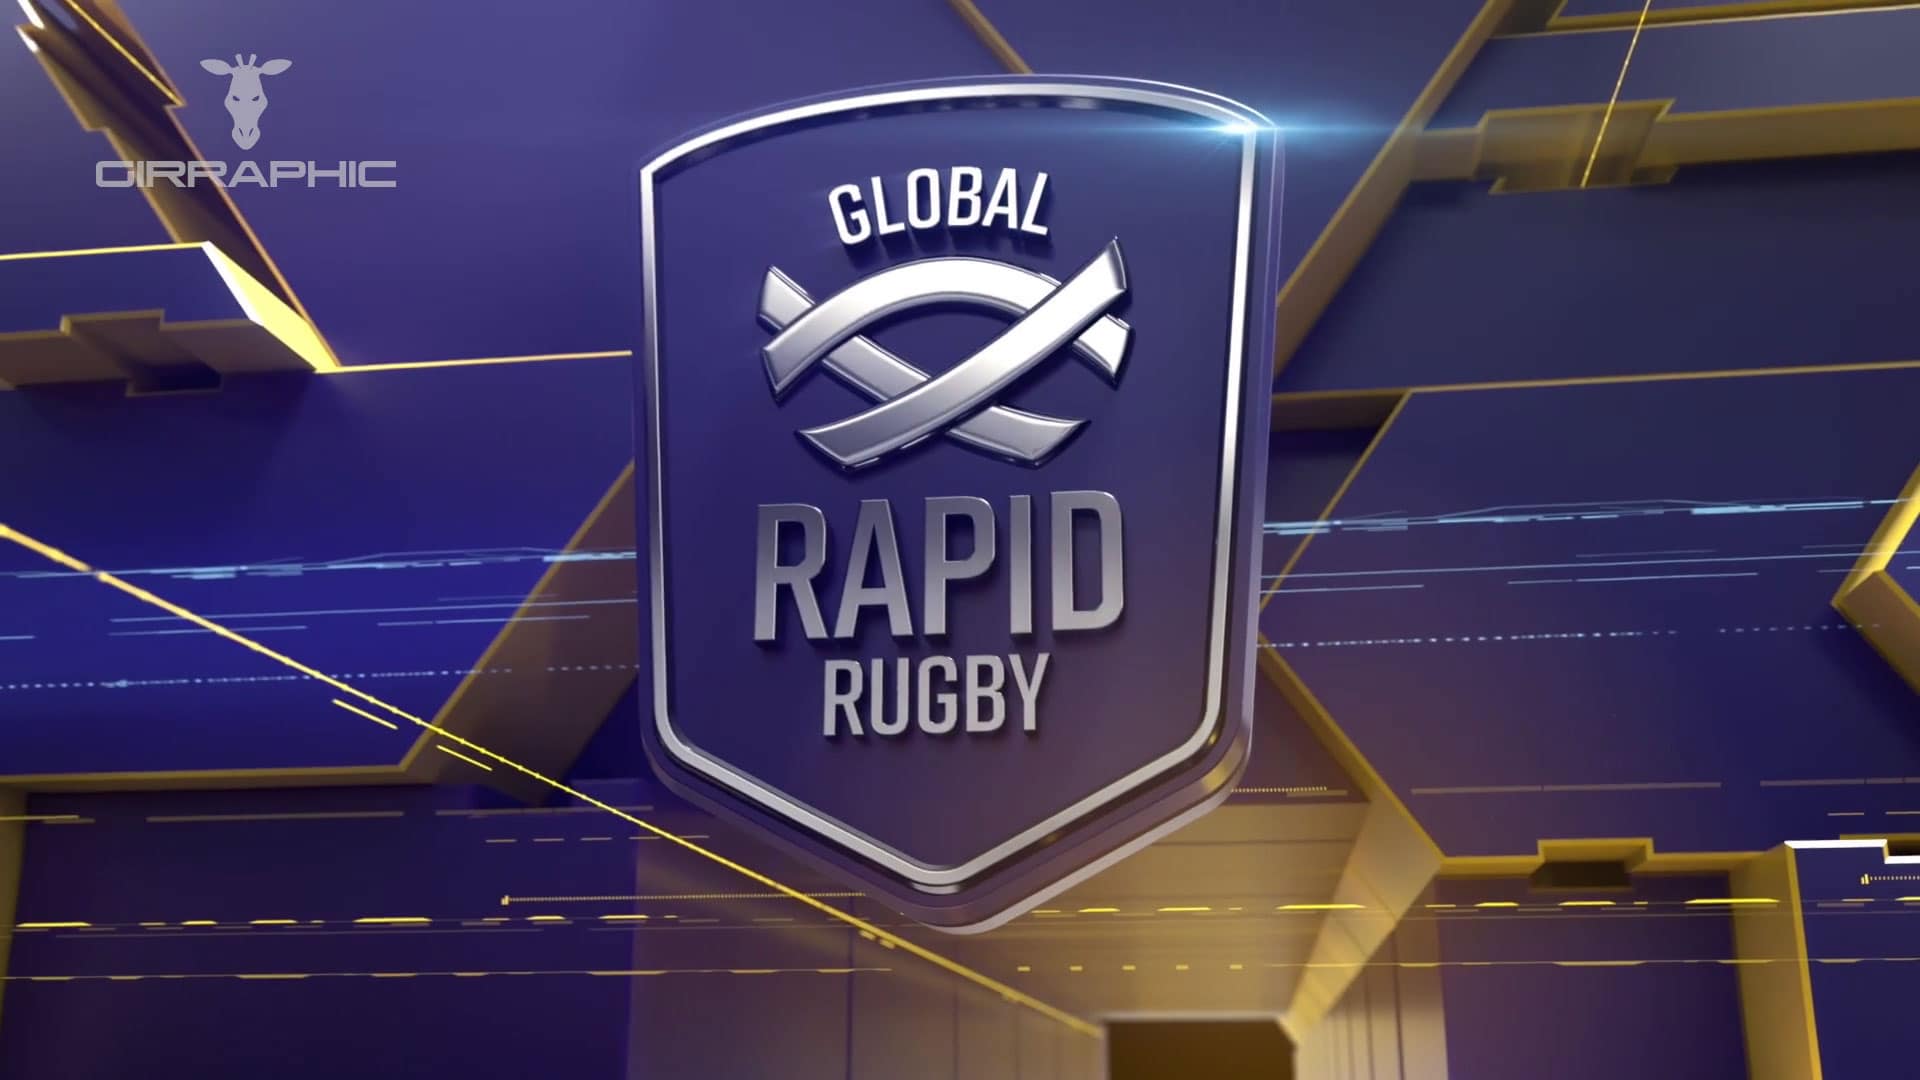 2019 Global Rapid Rugby Opener Still 06 Girraphic